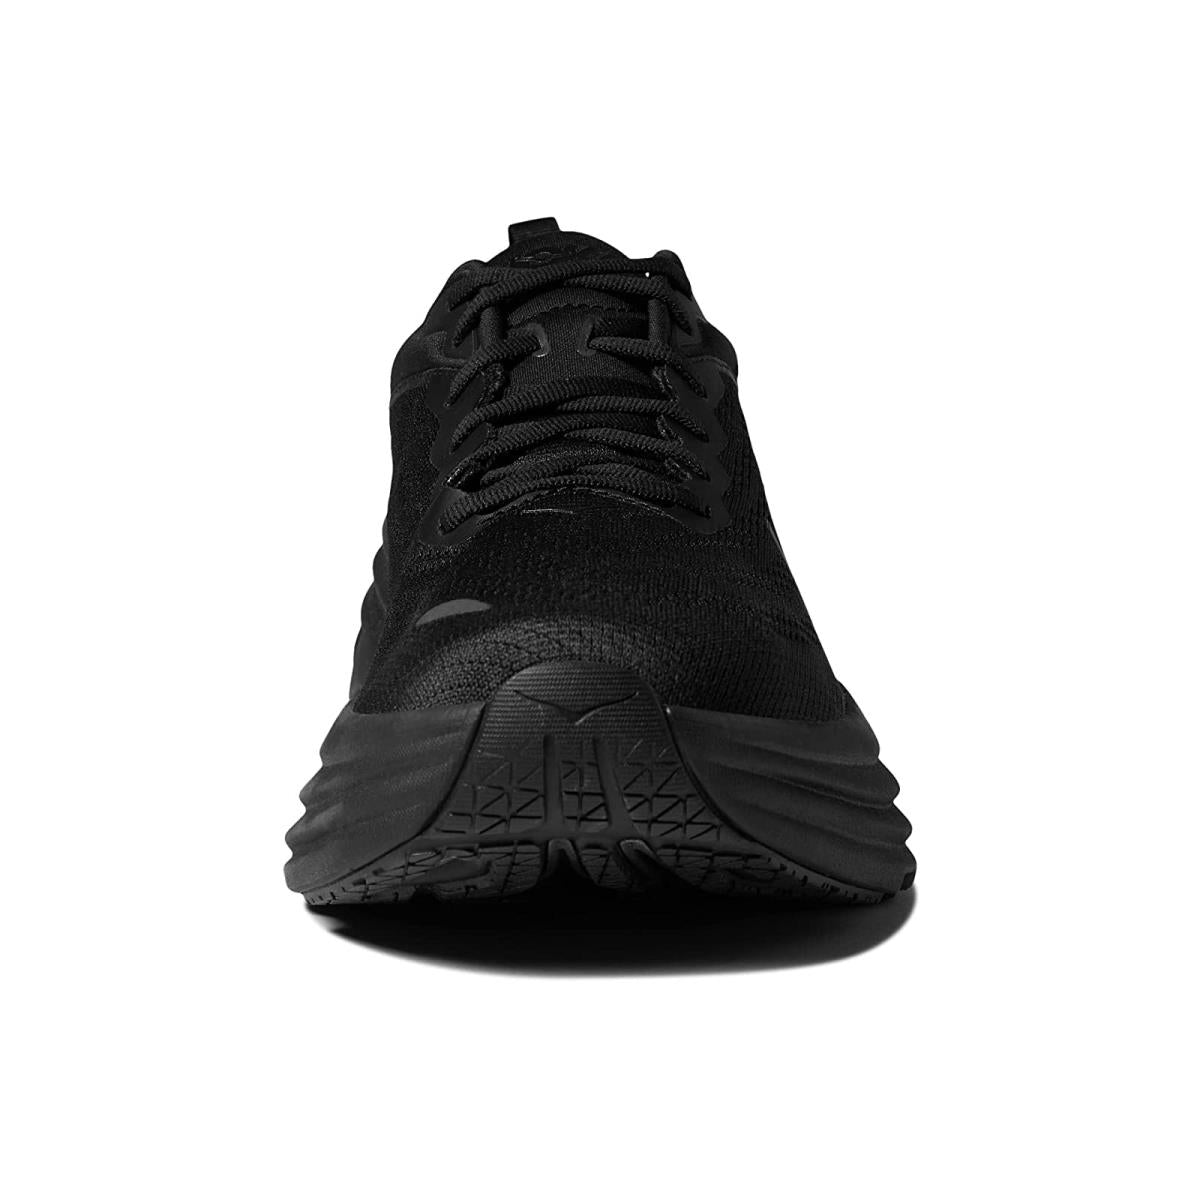 Hoka Bondi 8 Men's (Wide) Everyday Running Shoe - Black / Black - Size 8.5EE